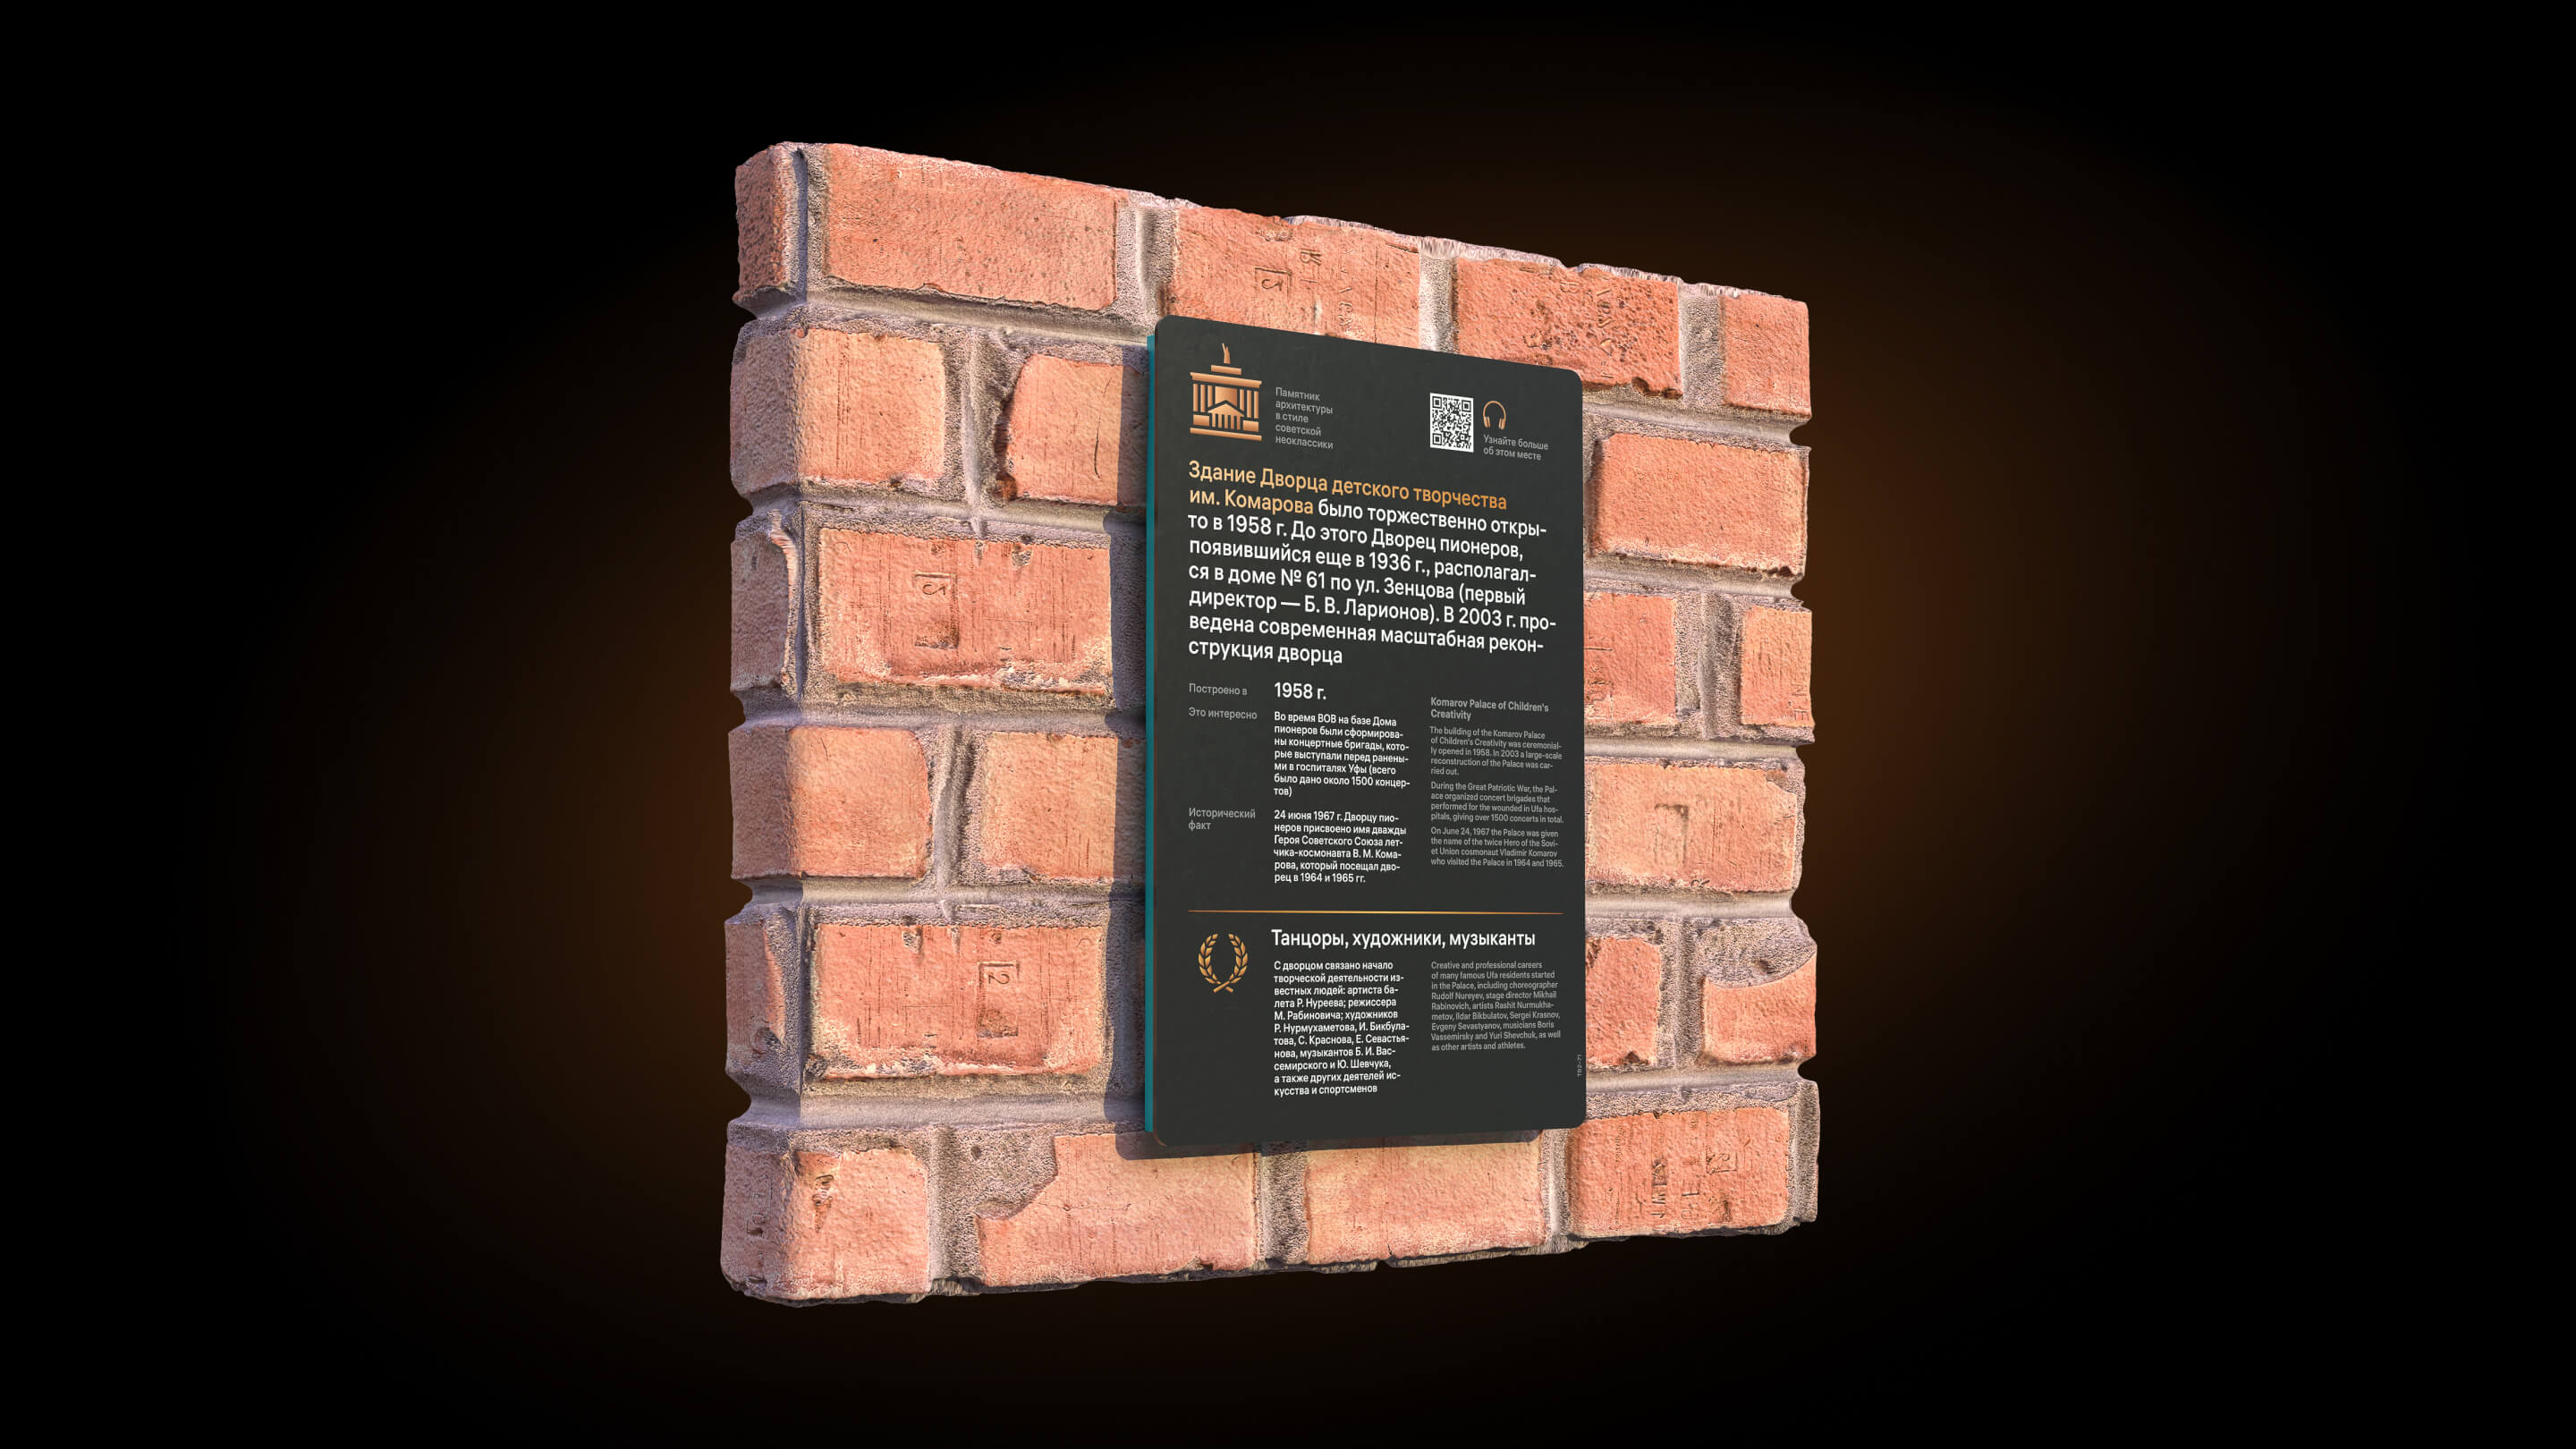 ufa navigation plate on brick